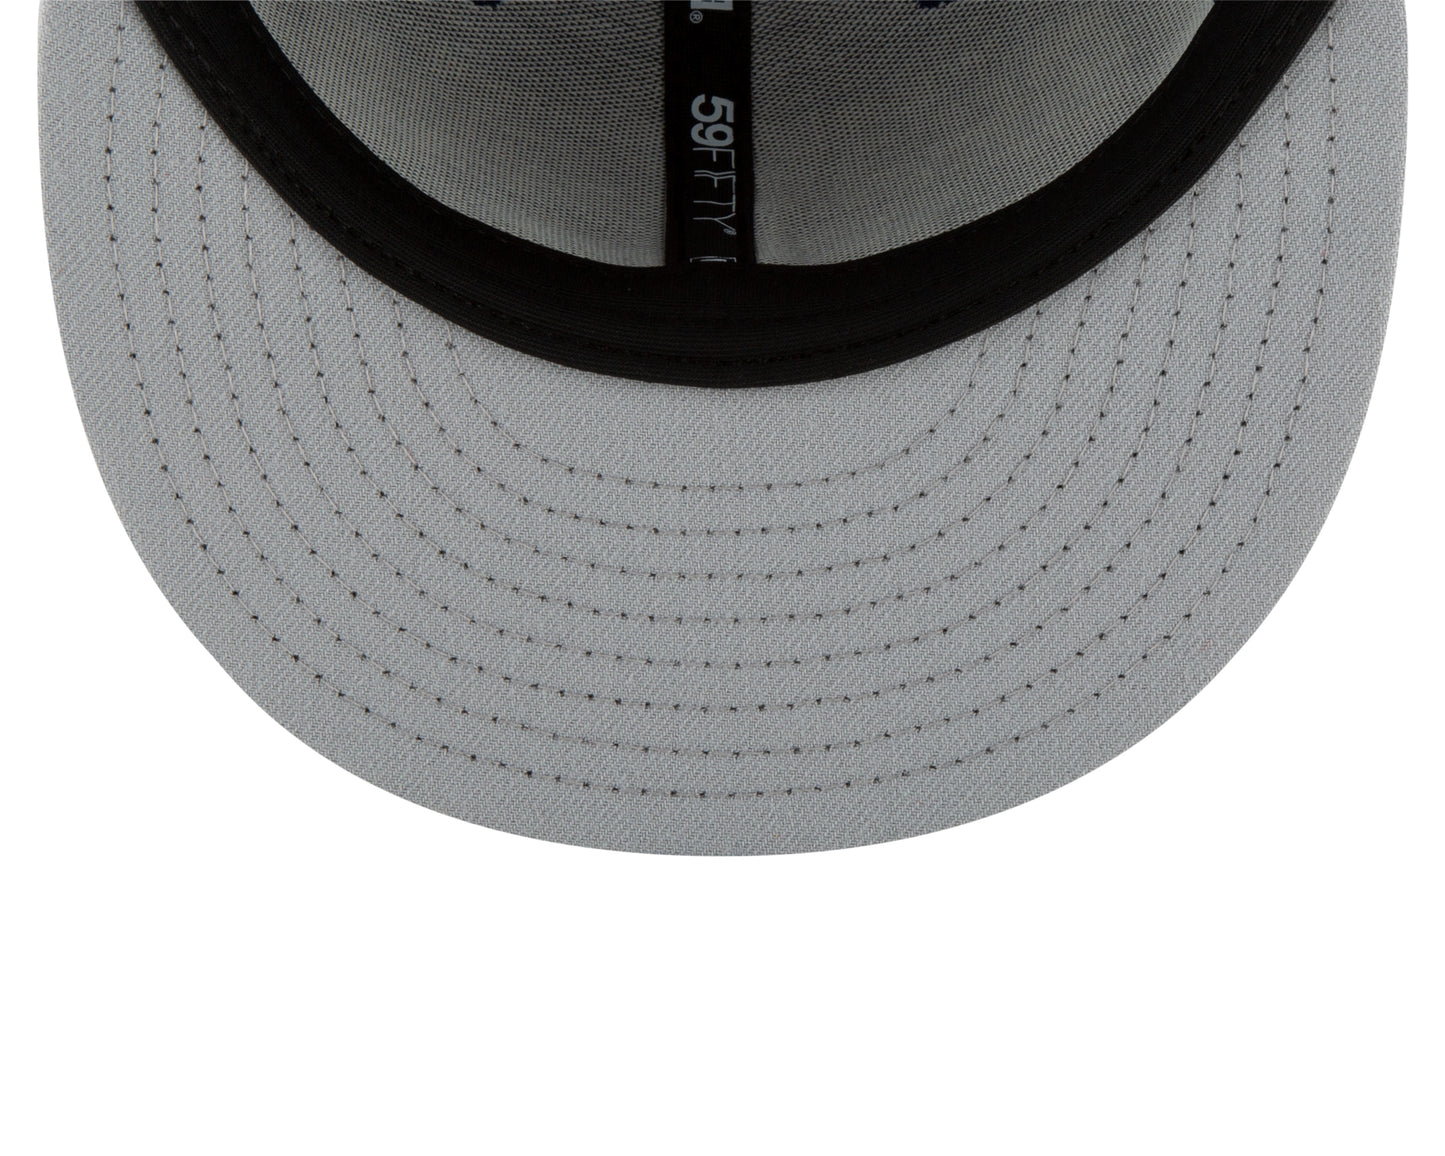 Boston Red Sox New Era B-Dub 59FIFTY Fitted Hat - Black